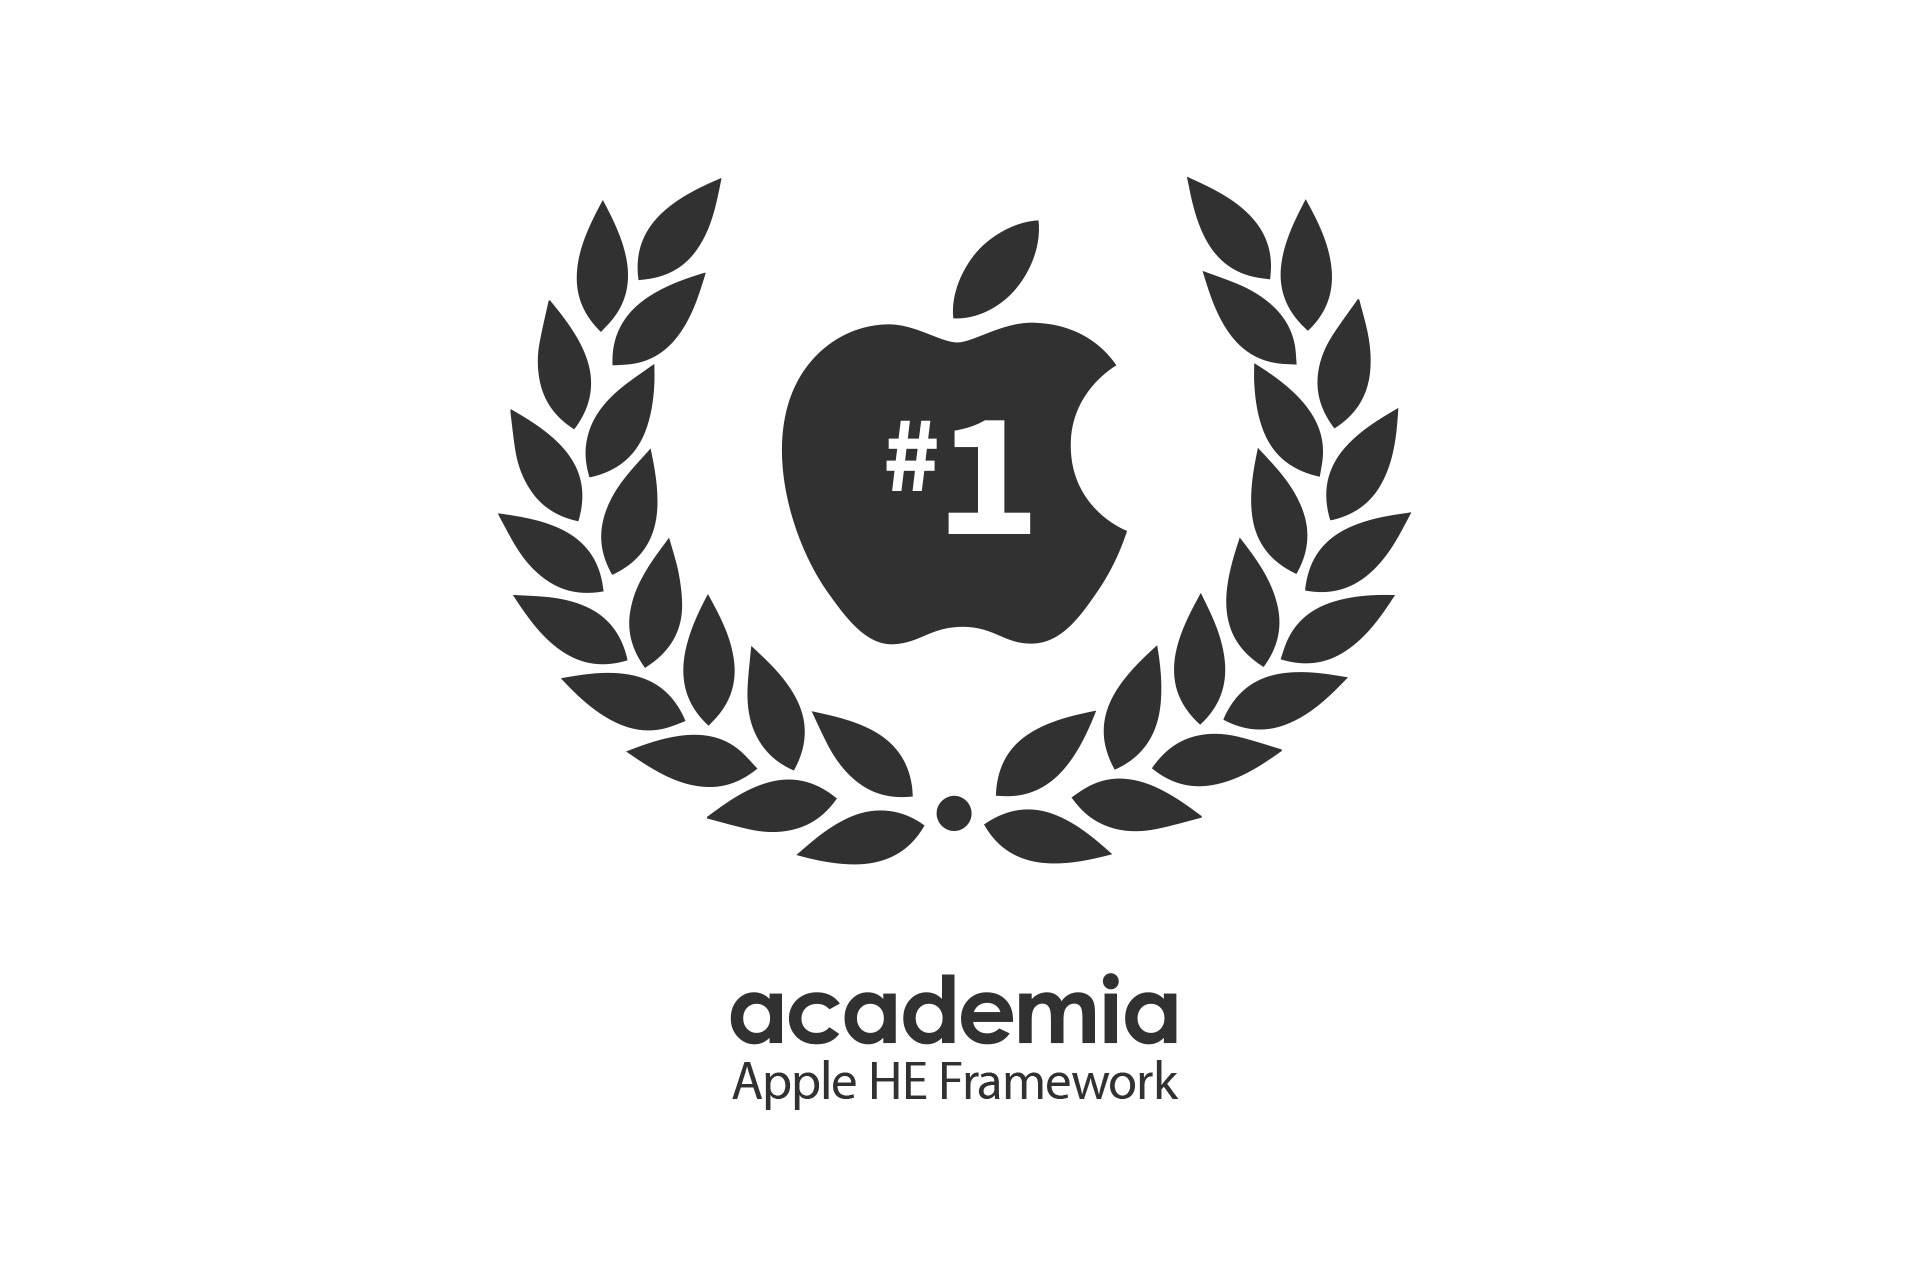 Academia retain ‘Rank 1’ status on the Apple HE Framework